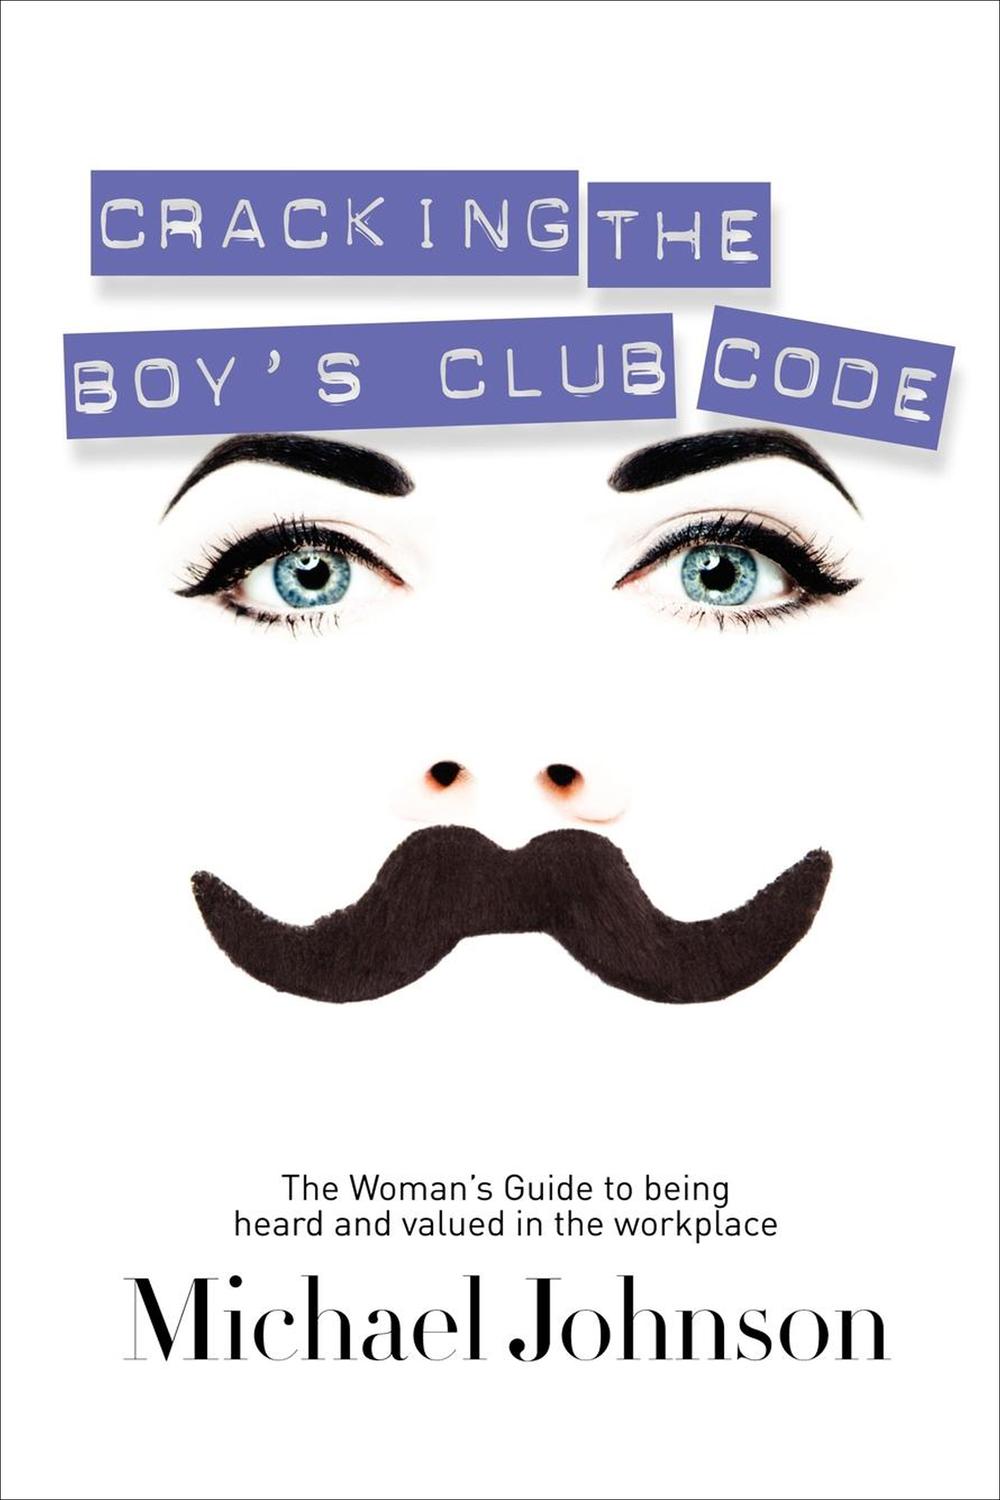 Cracking the Boy's Club Code - Michael Johnson